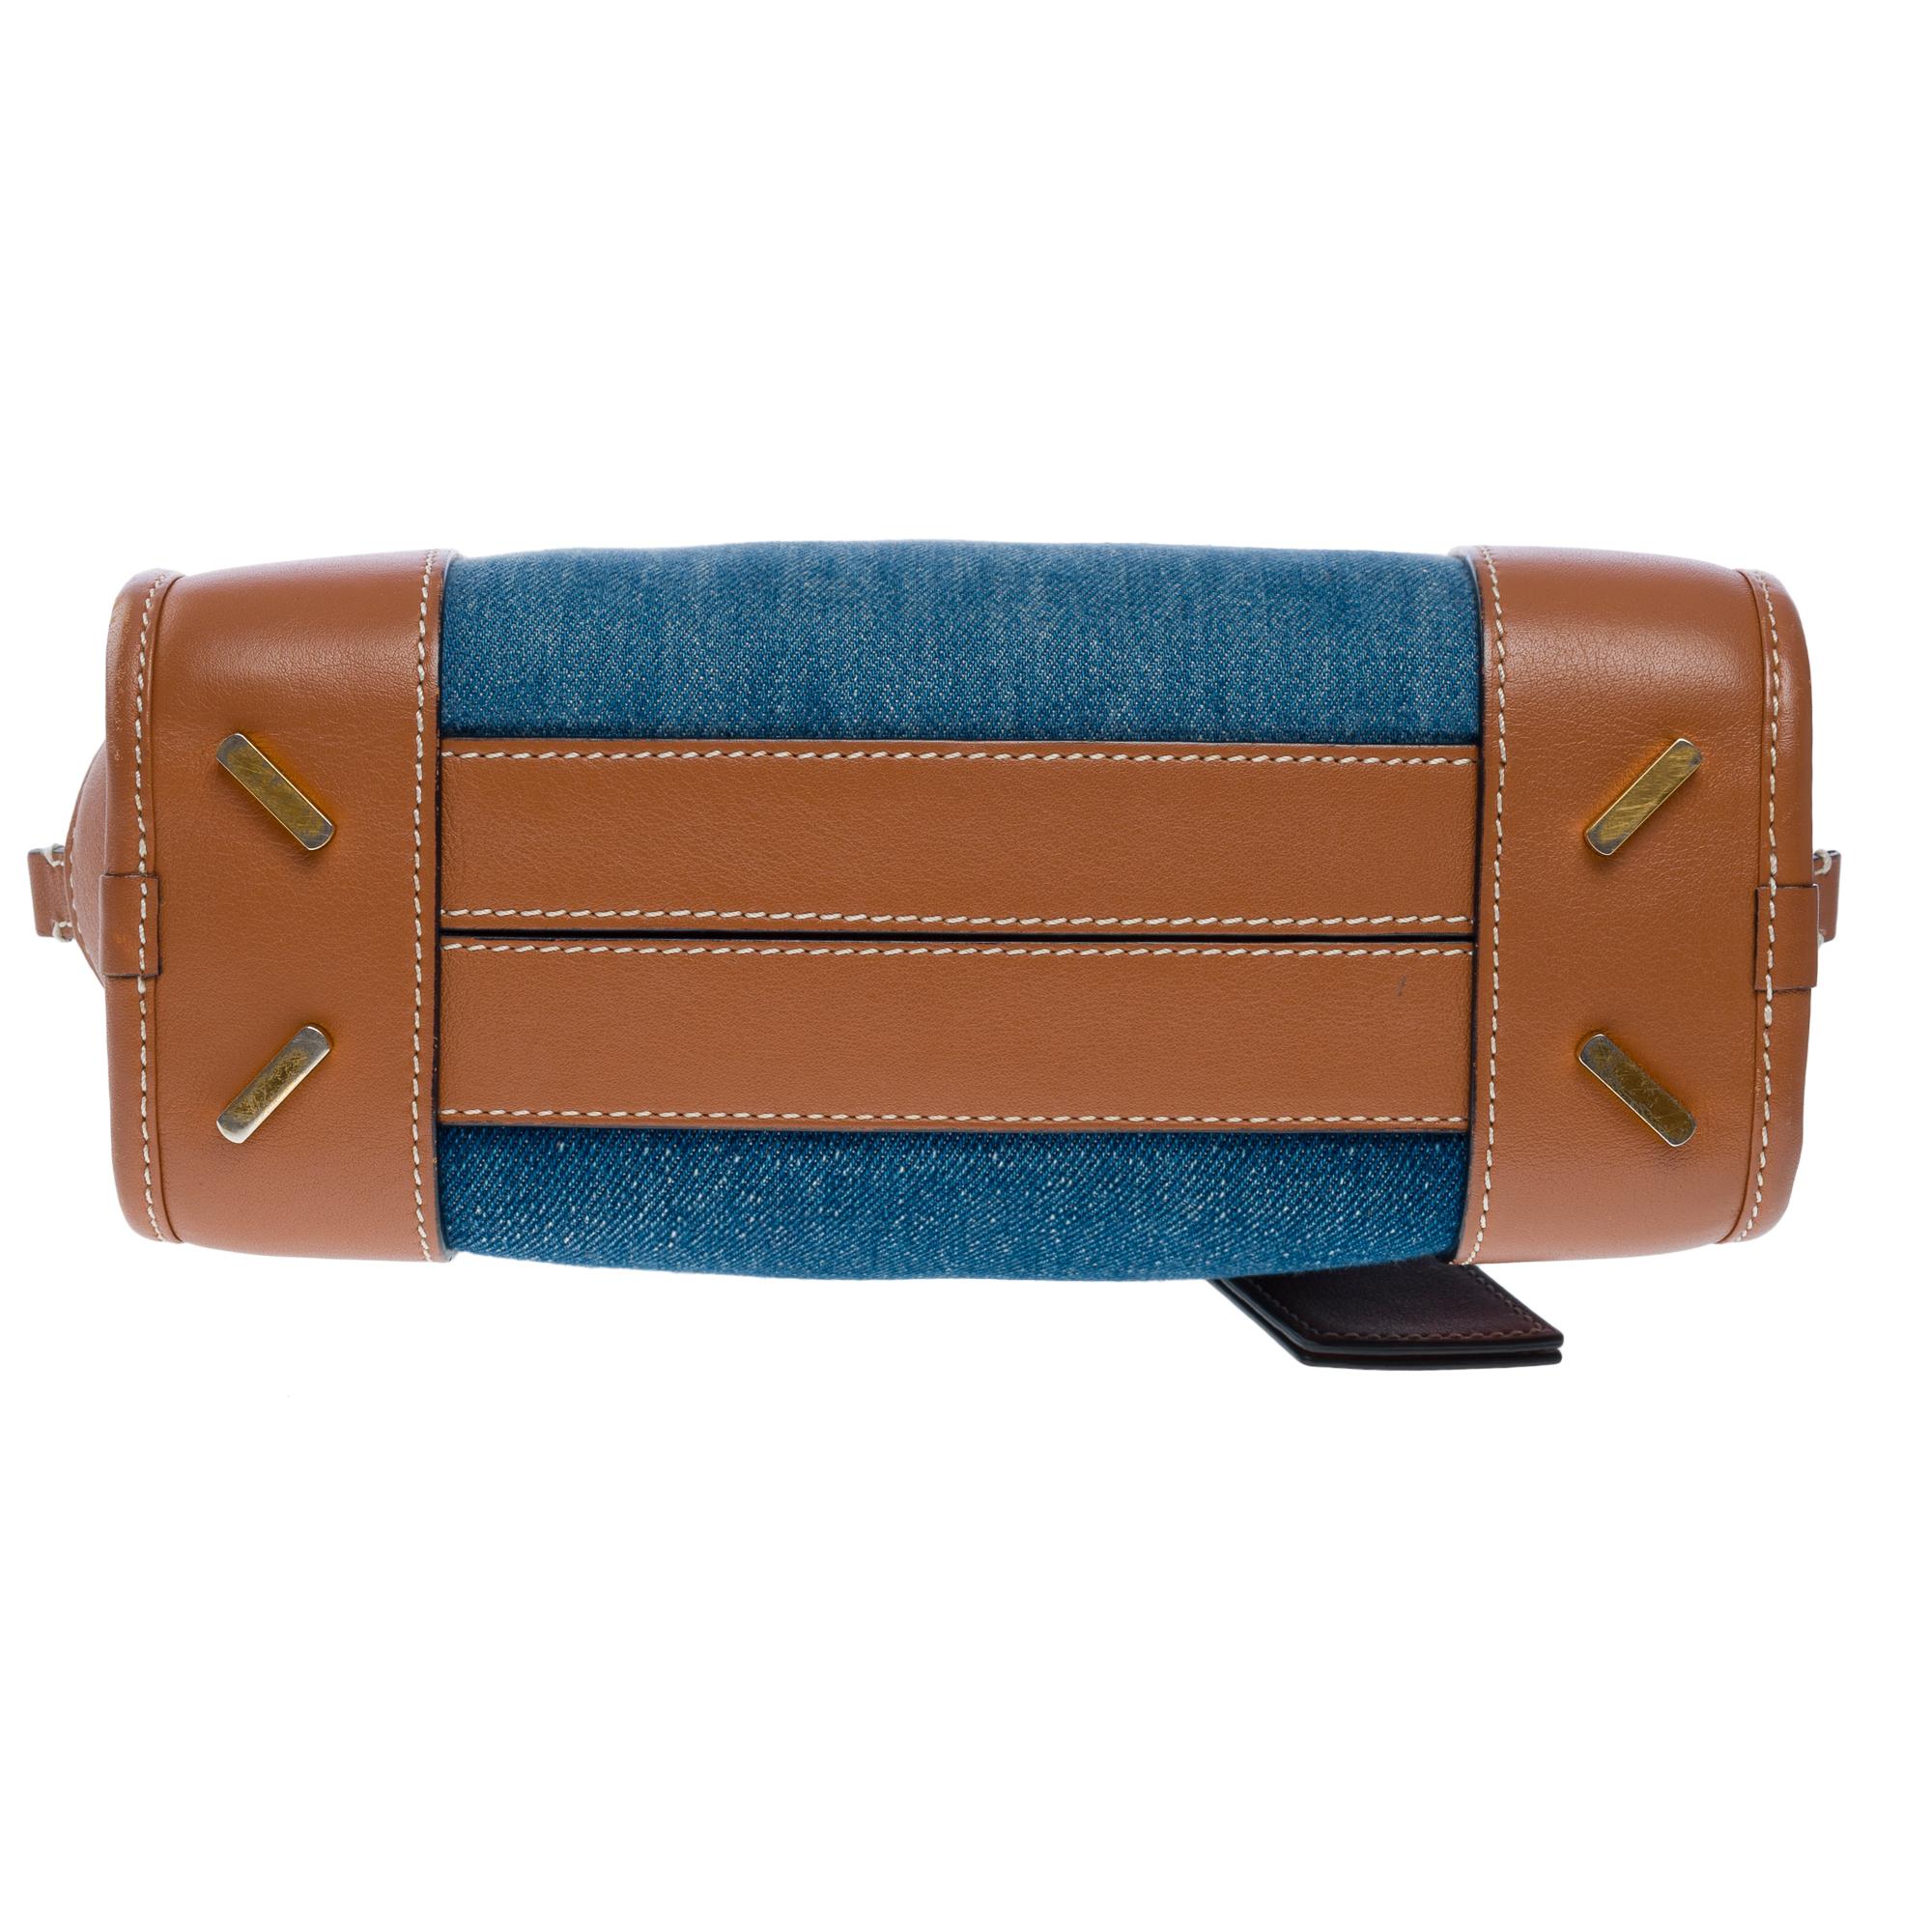 Loewe Amazona 23 2 Way handbag in denim and brown leather, GHW 7